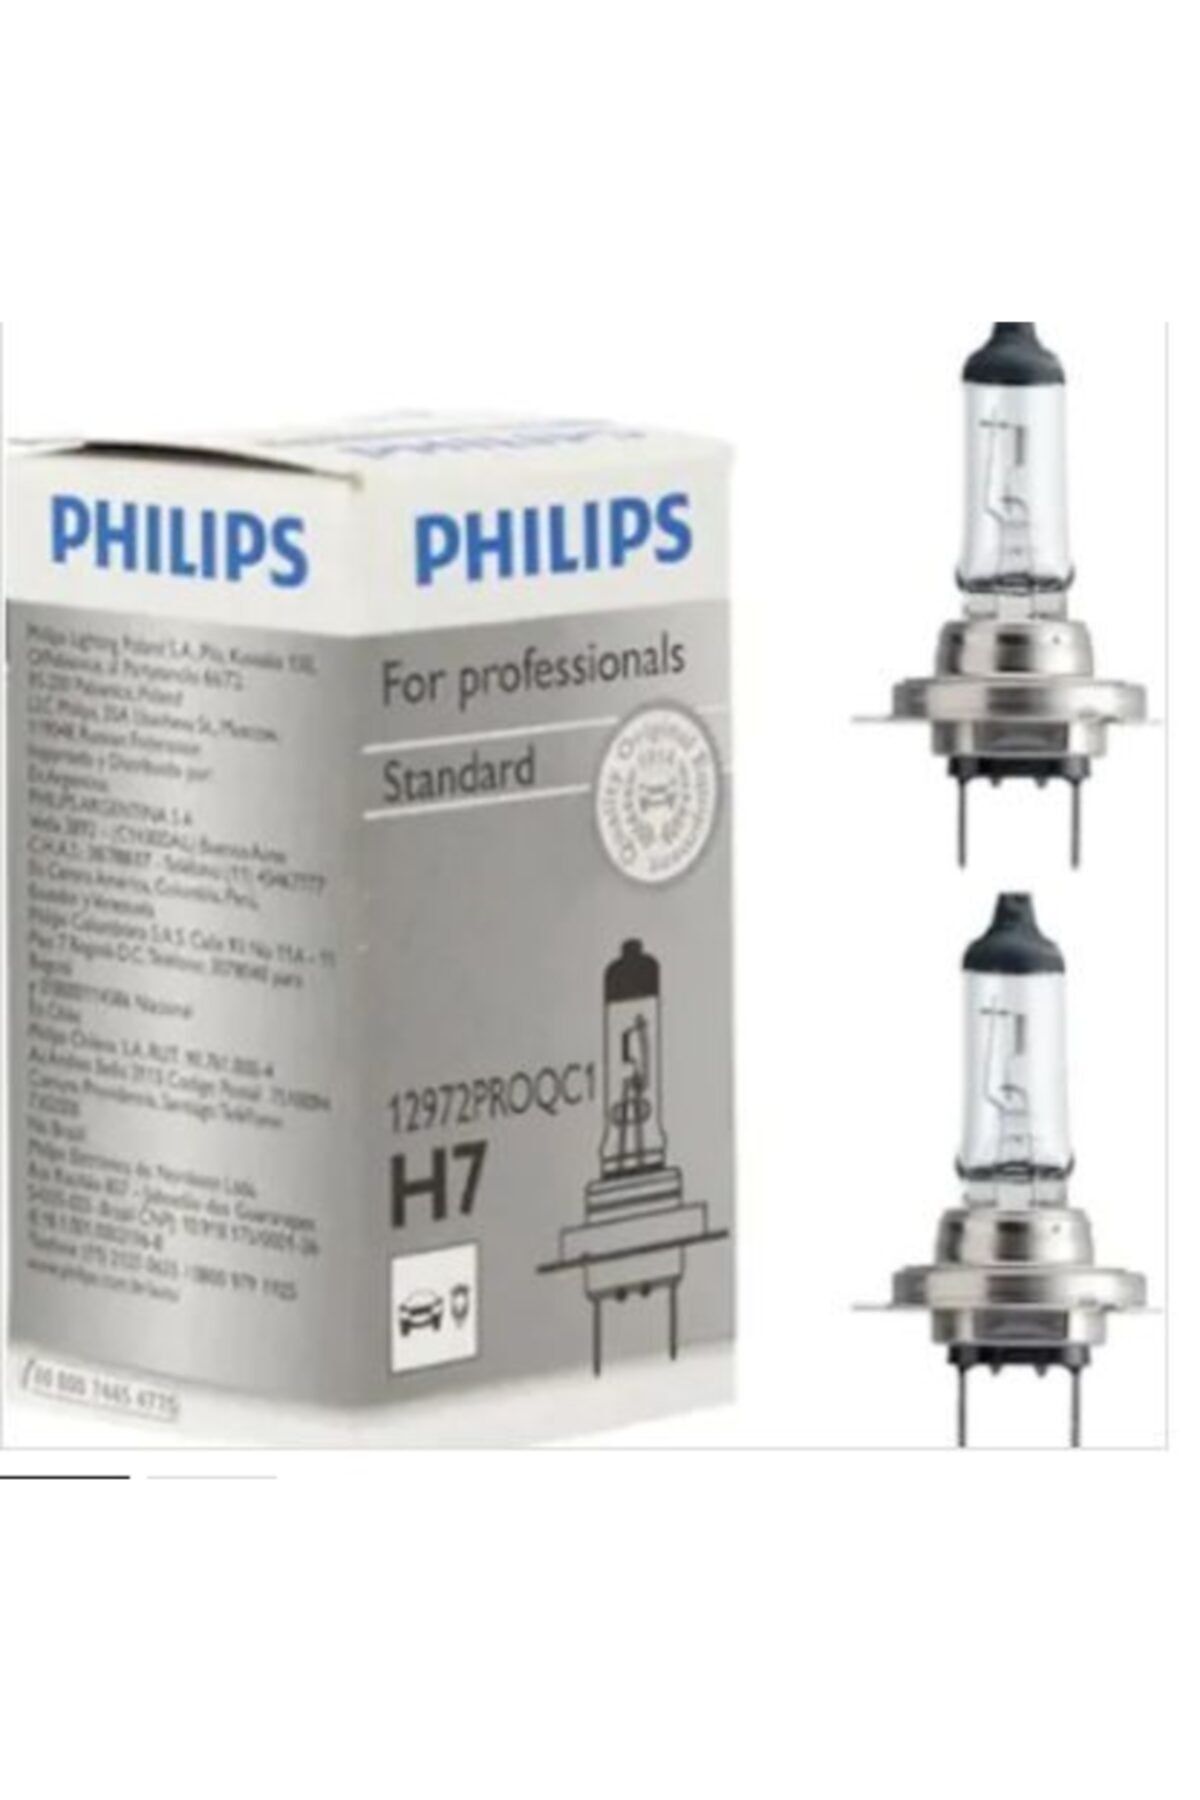 Philips 2 Adet H7 12v 55w Standart Ampul Phılıps